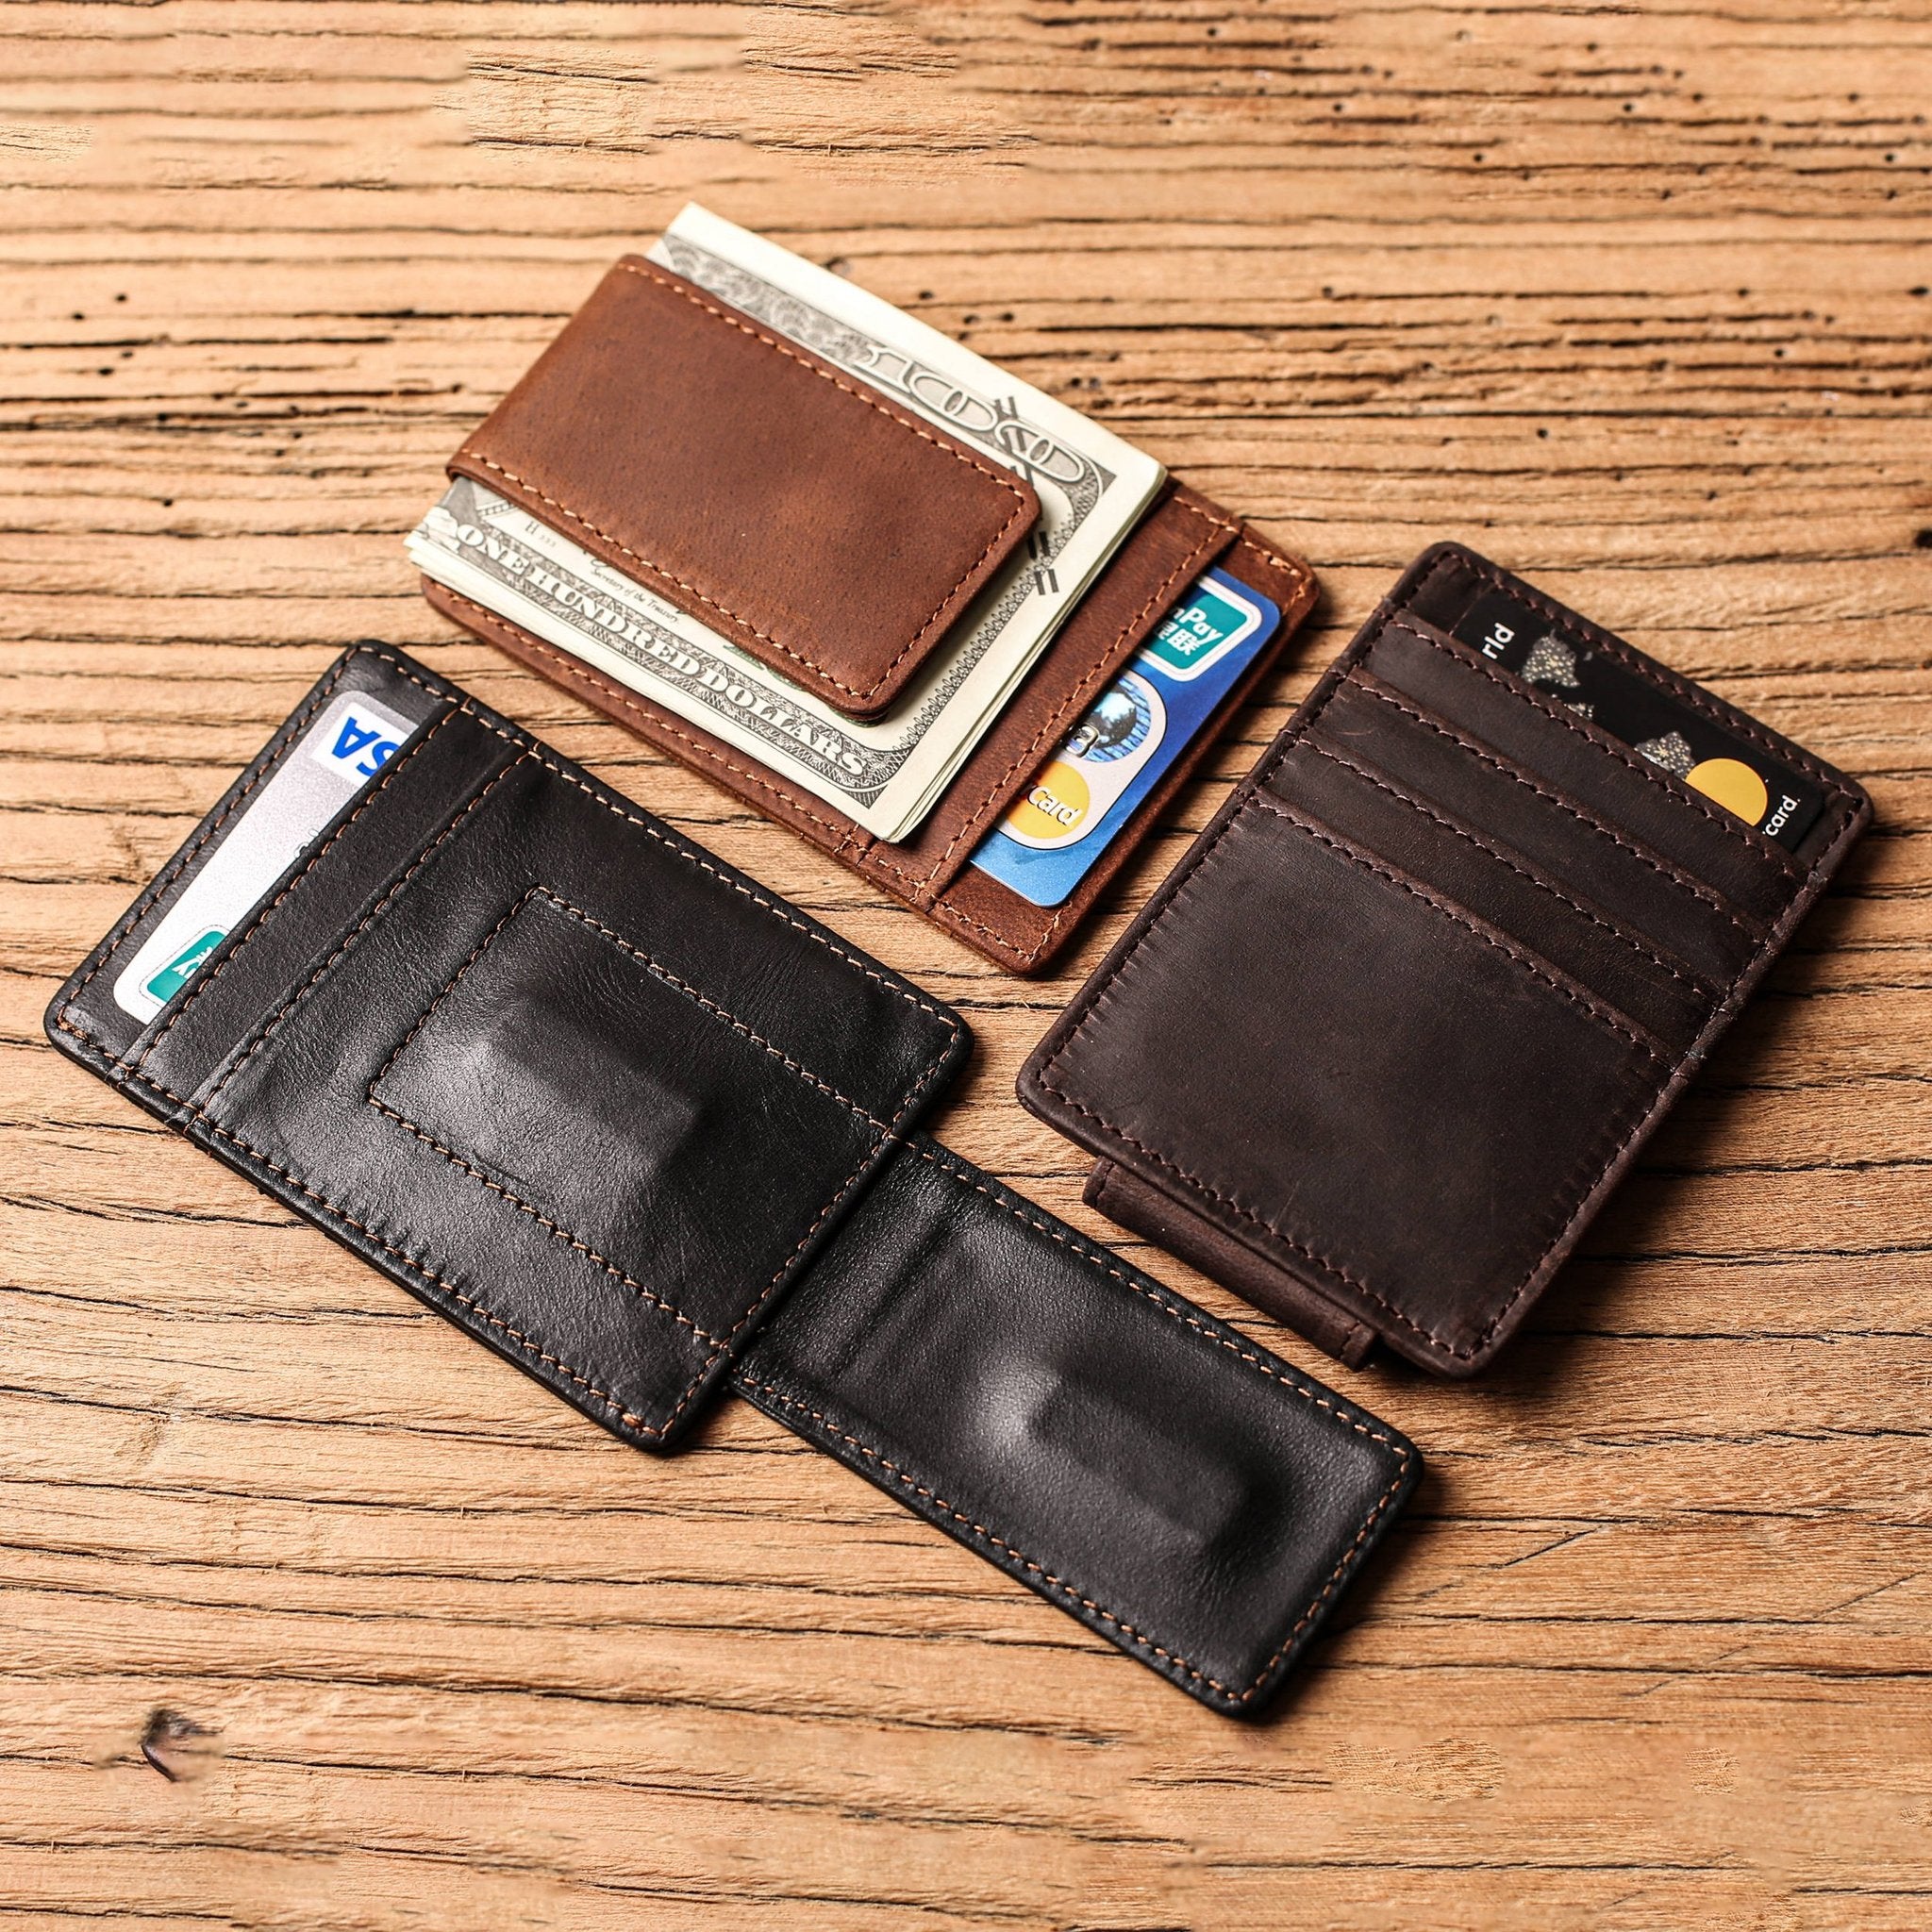 Personalized Men's Money Clip Wallet in Tan Brookstone